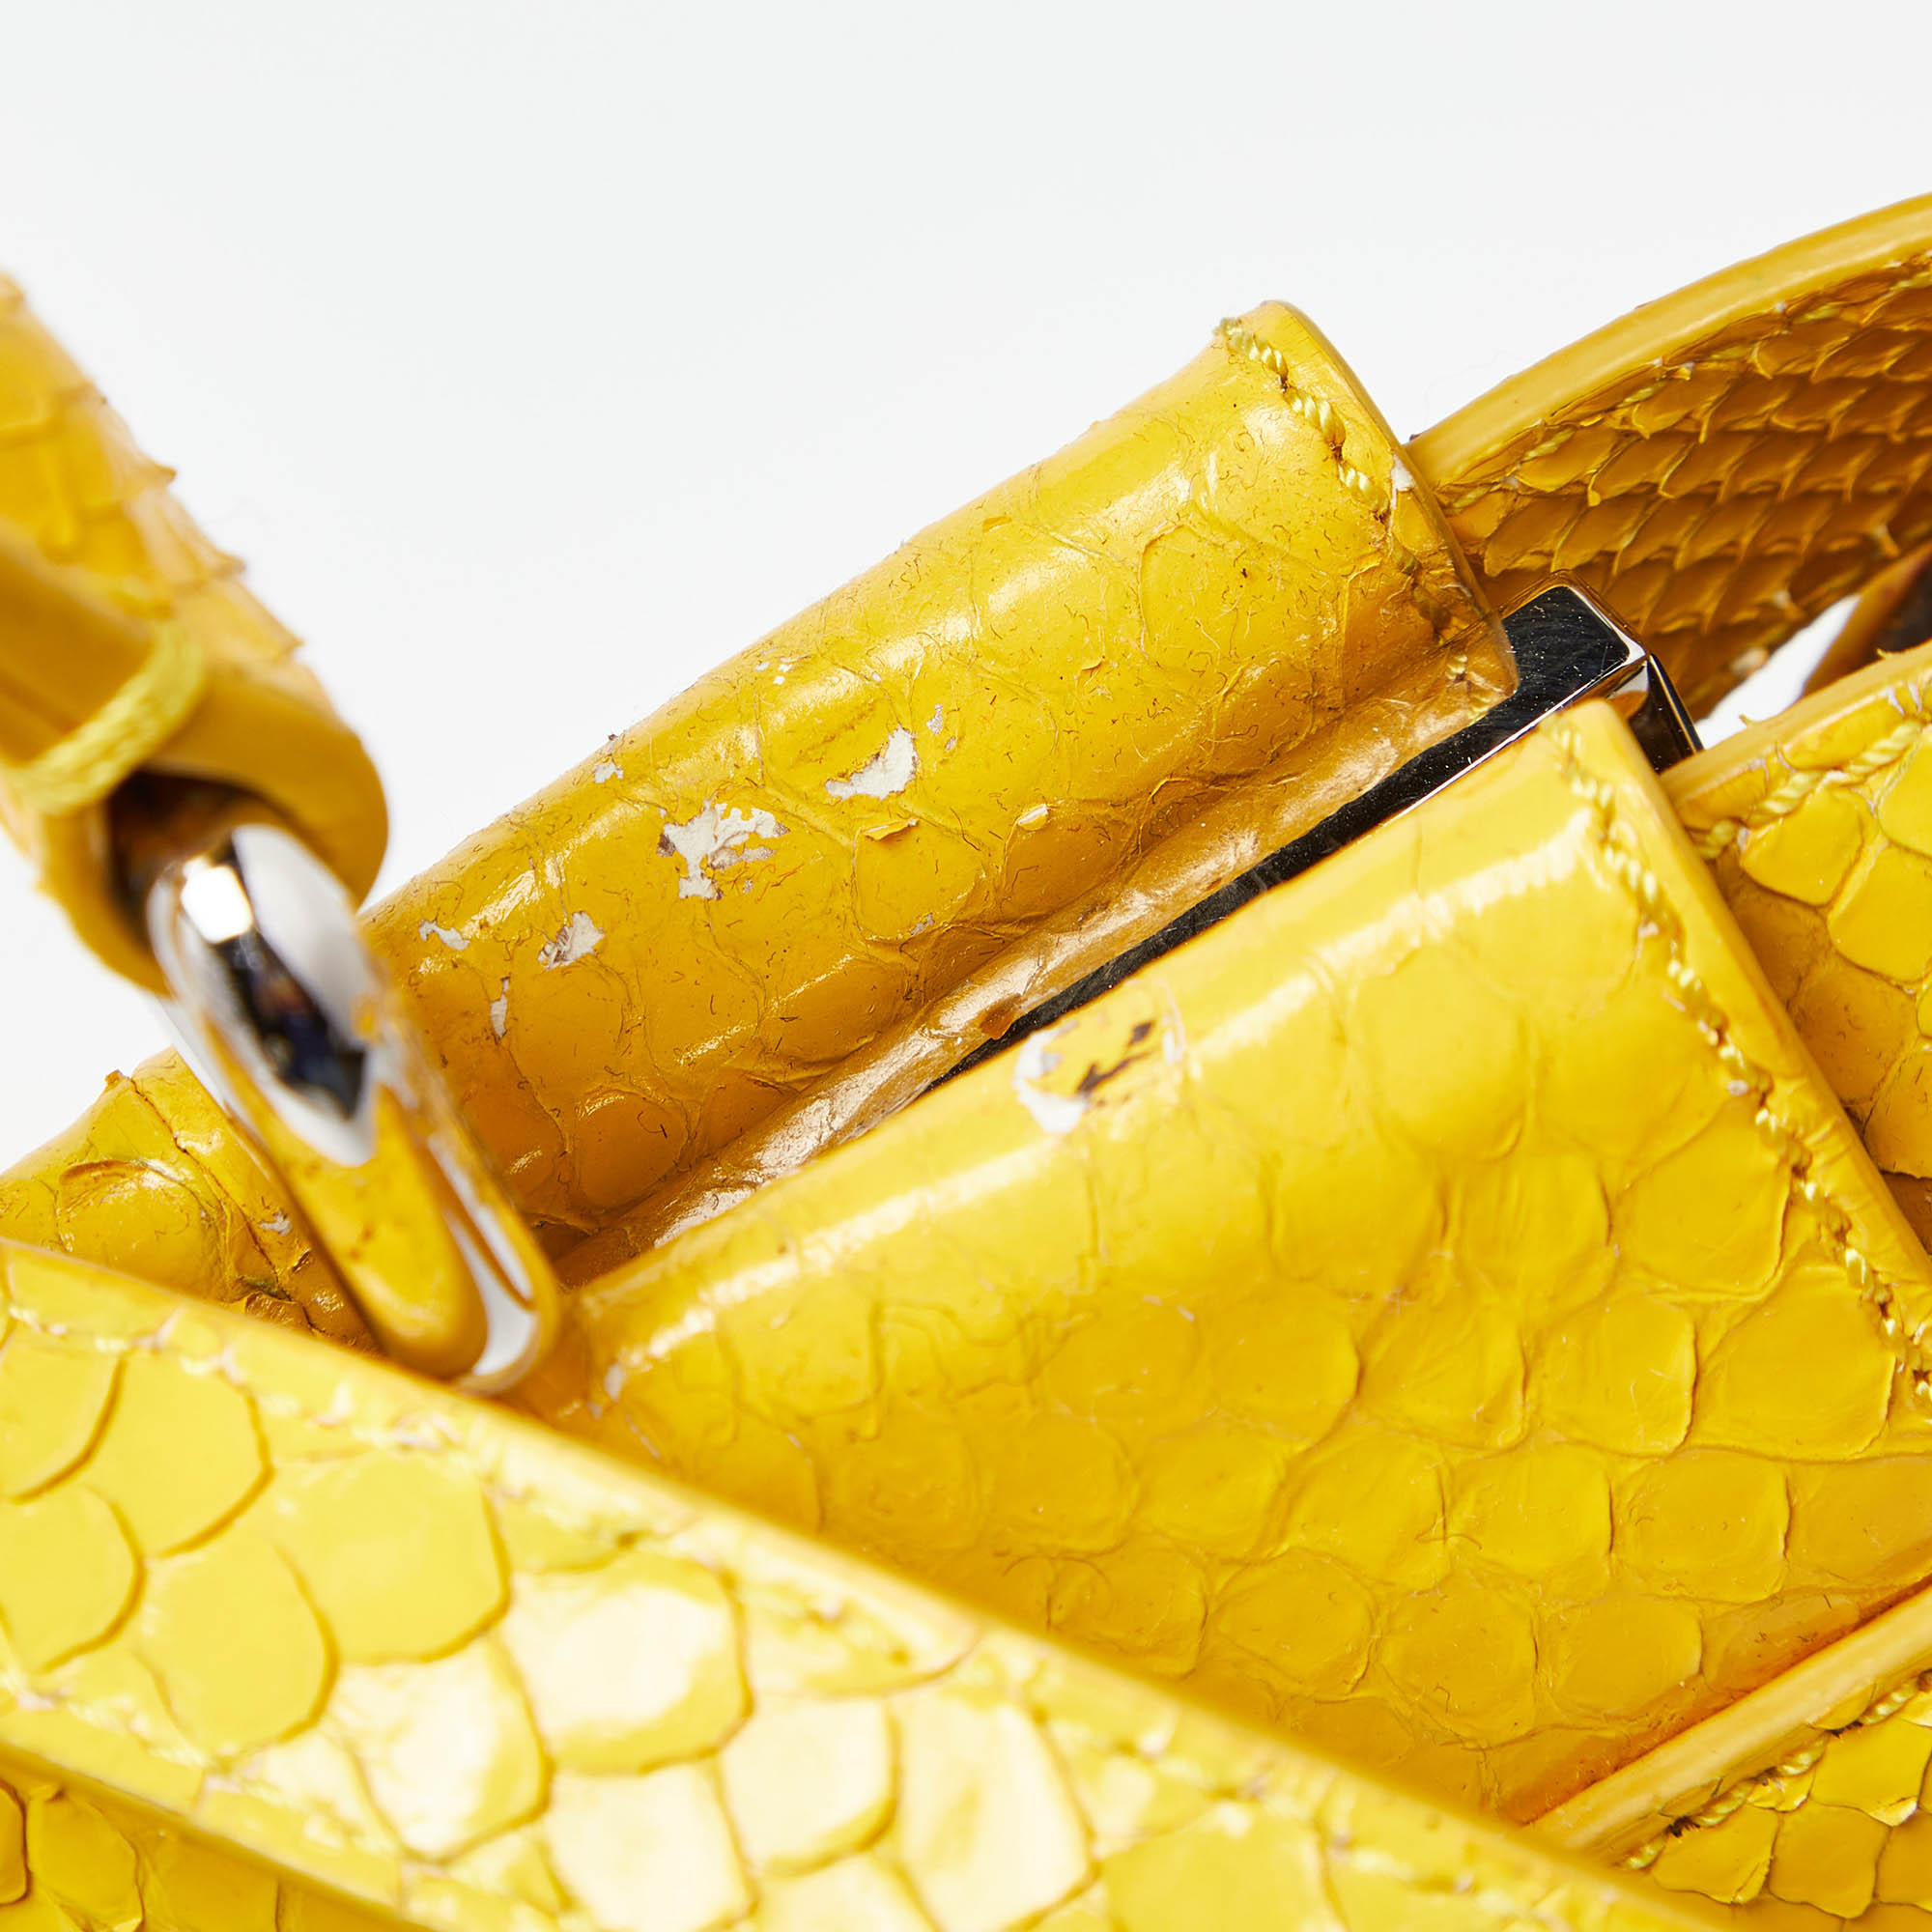 Fendi Yellow Python Medium Peekaboo Top Handle Bag